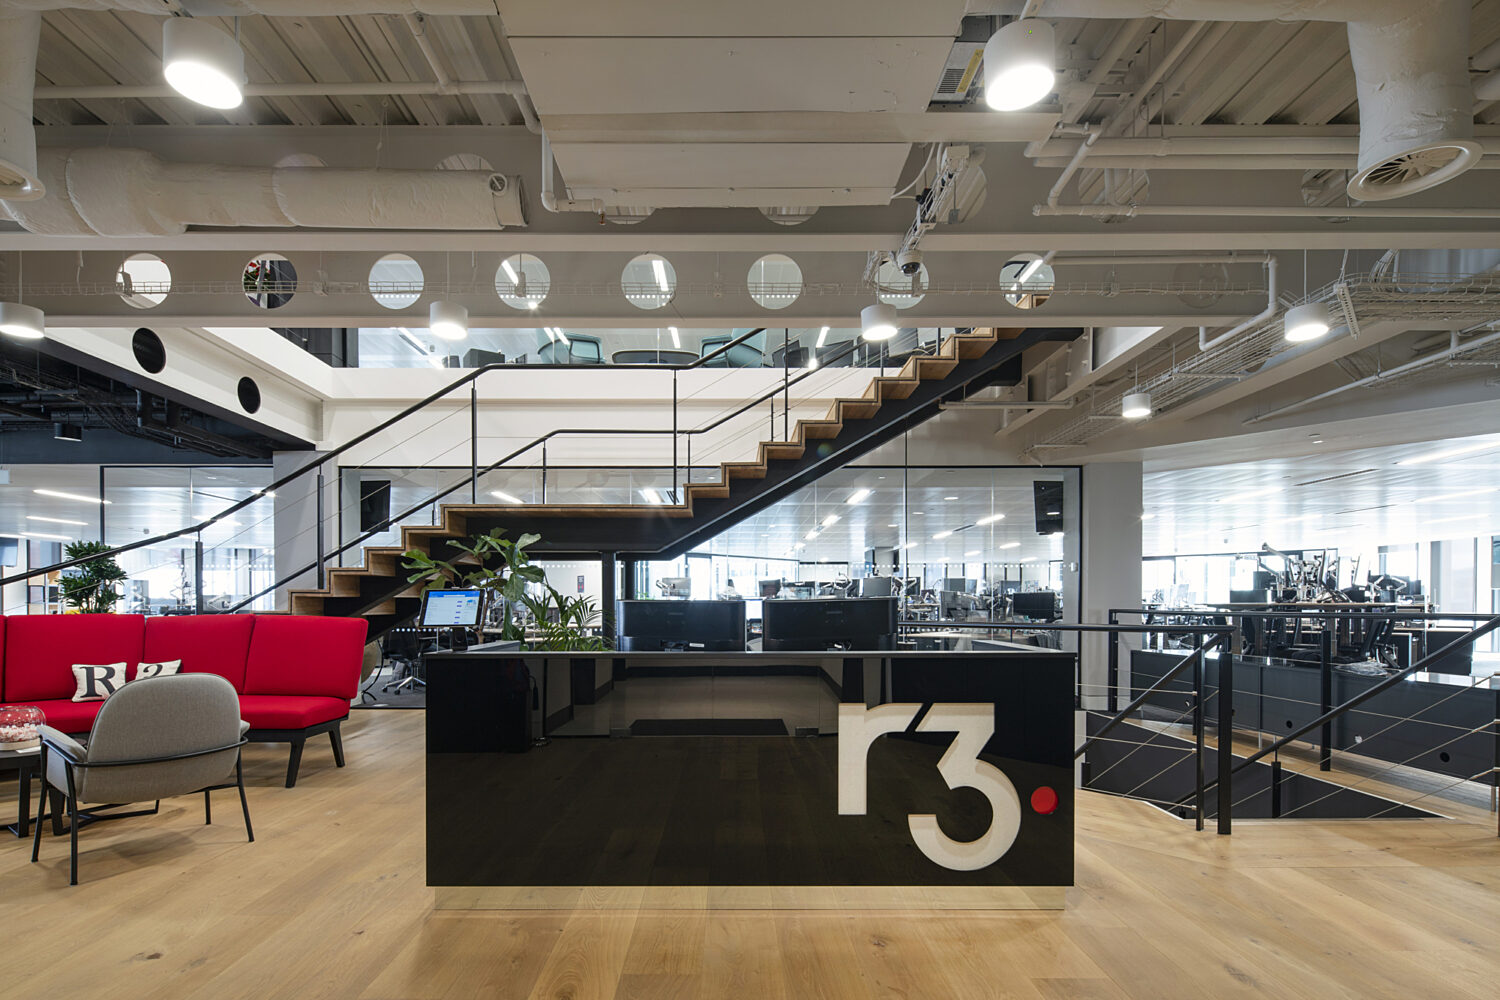 R3 reception space